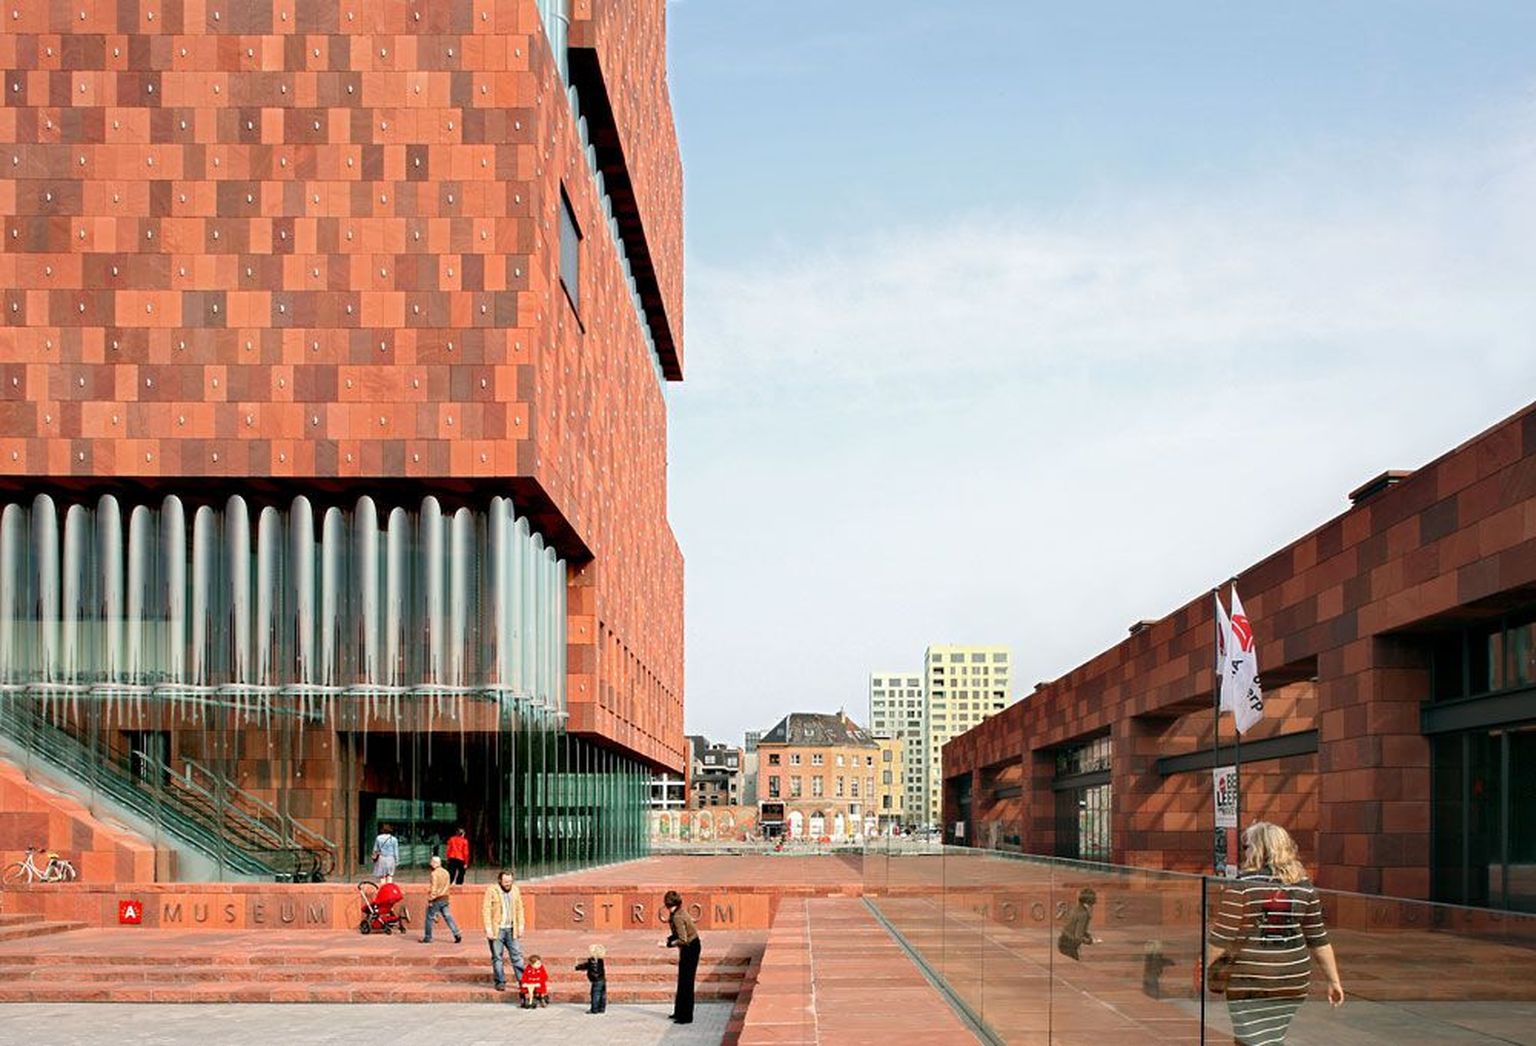 Antwerpeni linnamuuseum (Museum Aan de Stroom, MAS). Neutelings Riedijk Architects. Projekt aastast 2000, hoone valmis 2010.